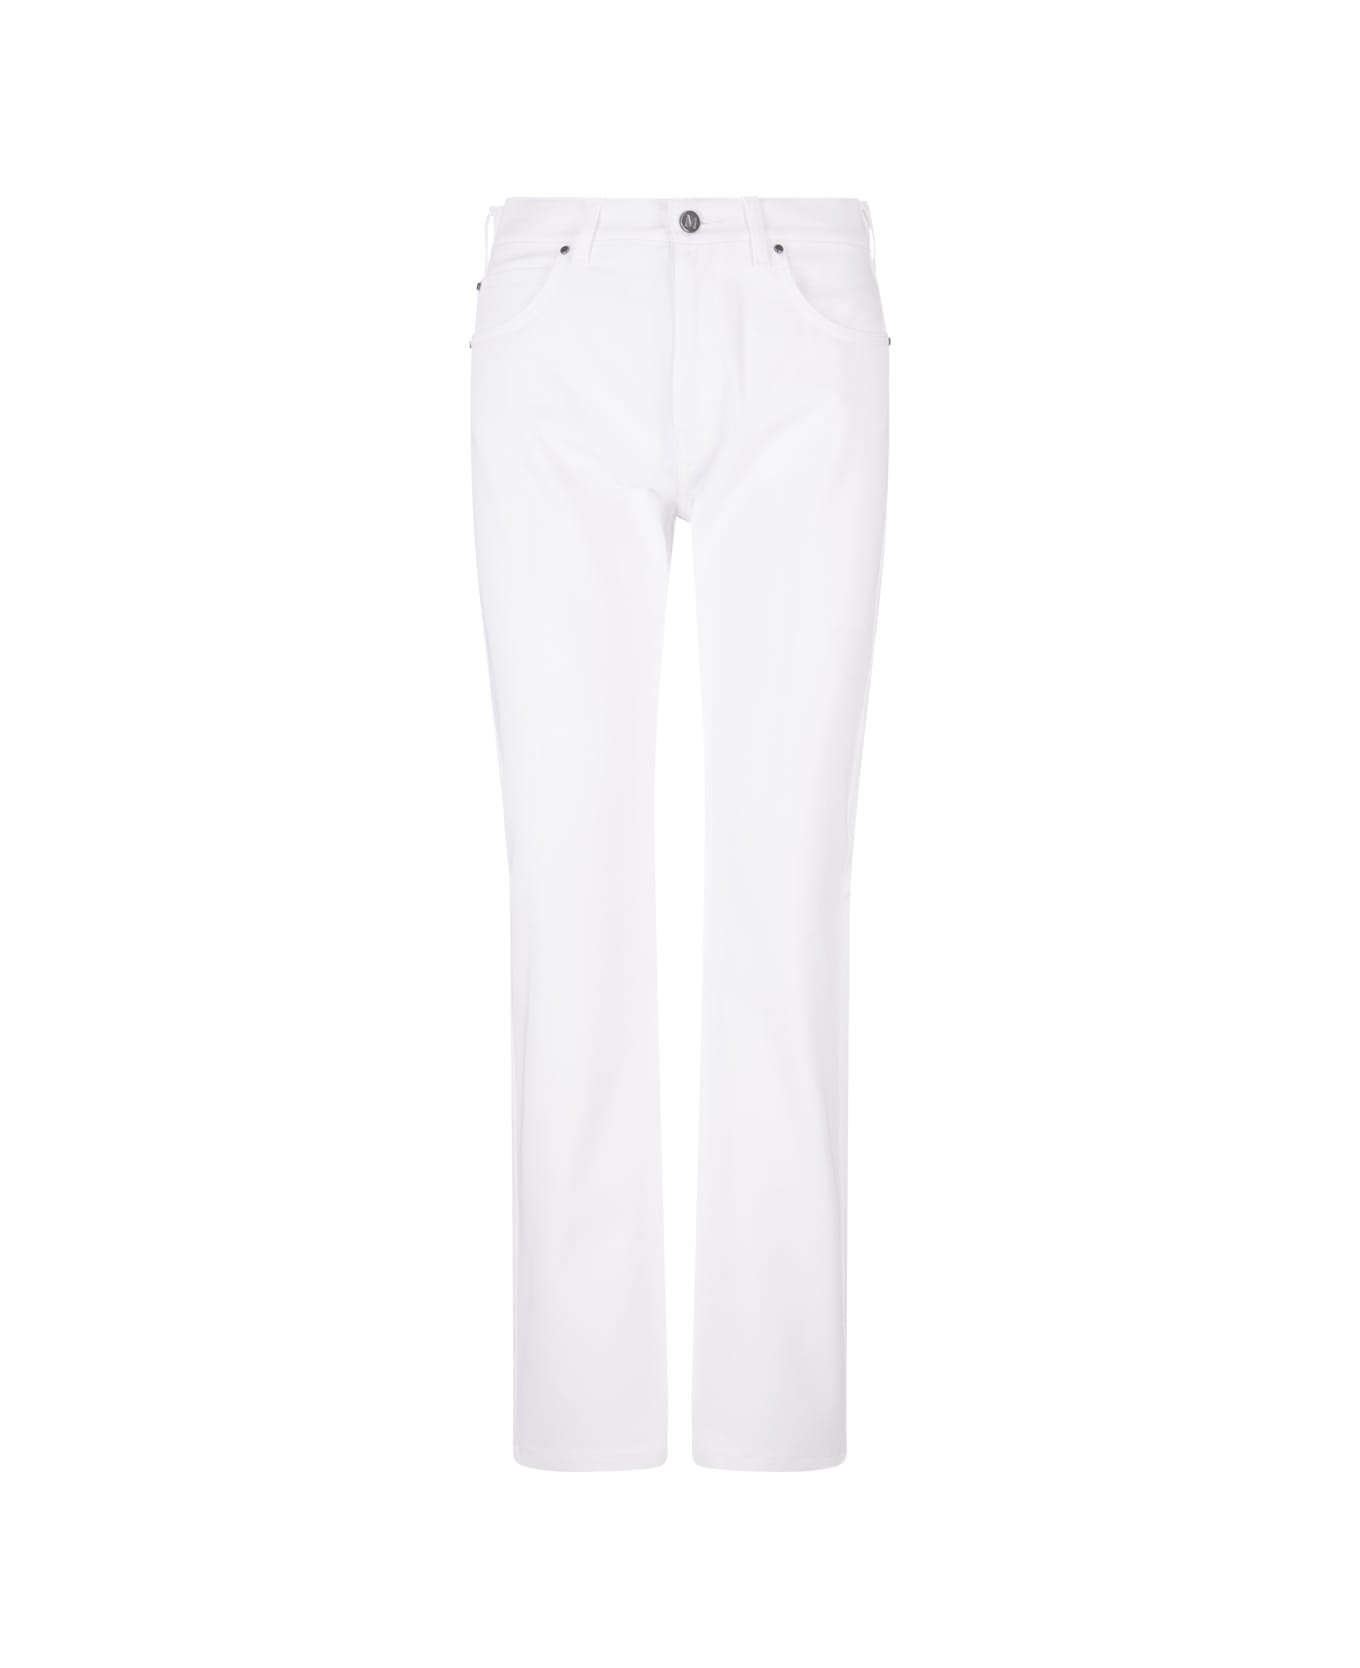 Max Mara White Caprile Jeans - Bianco